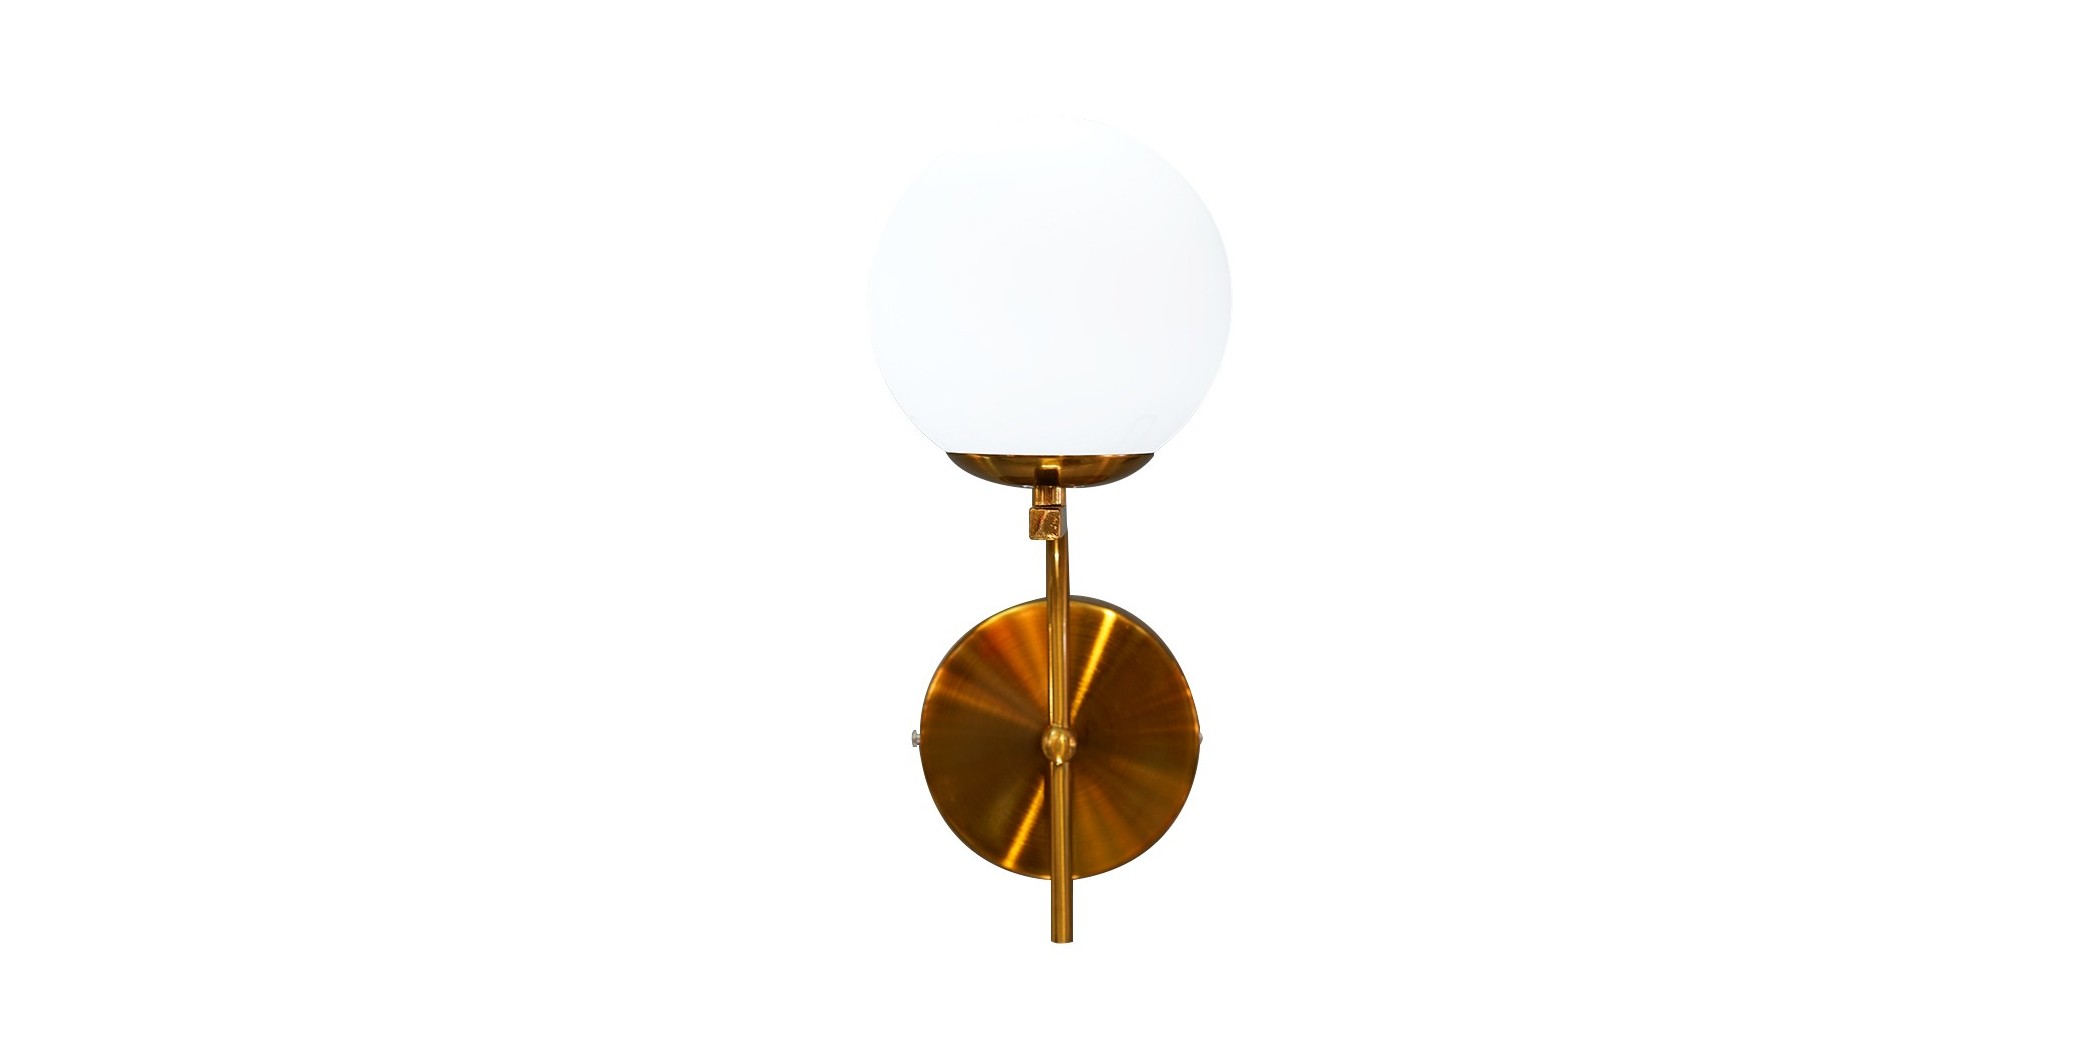 Kora-Golden With Glass Mural Lamp D161/1